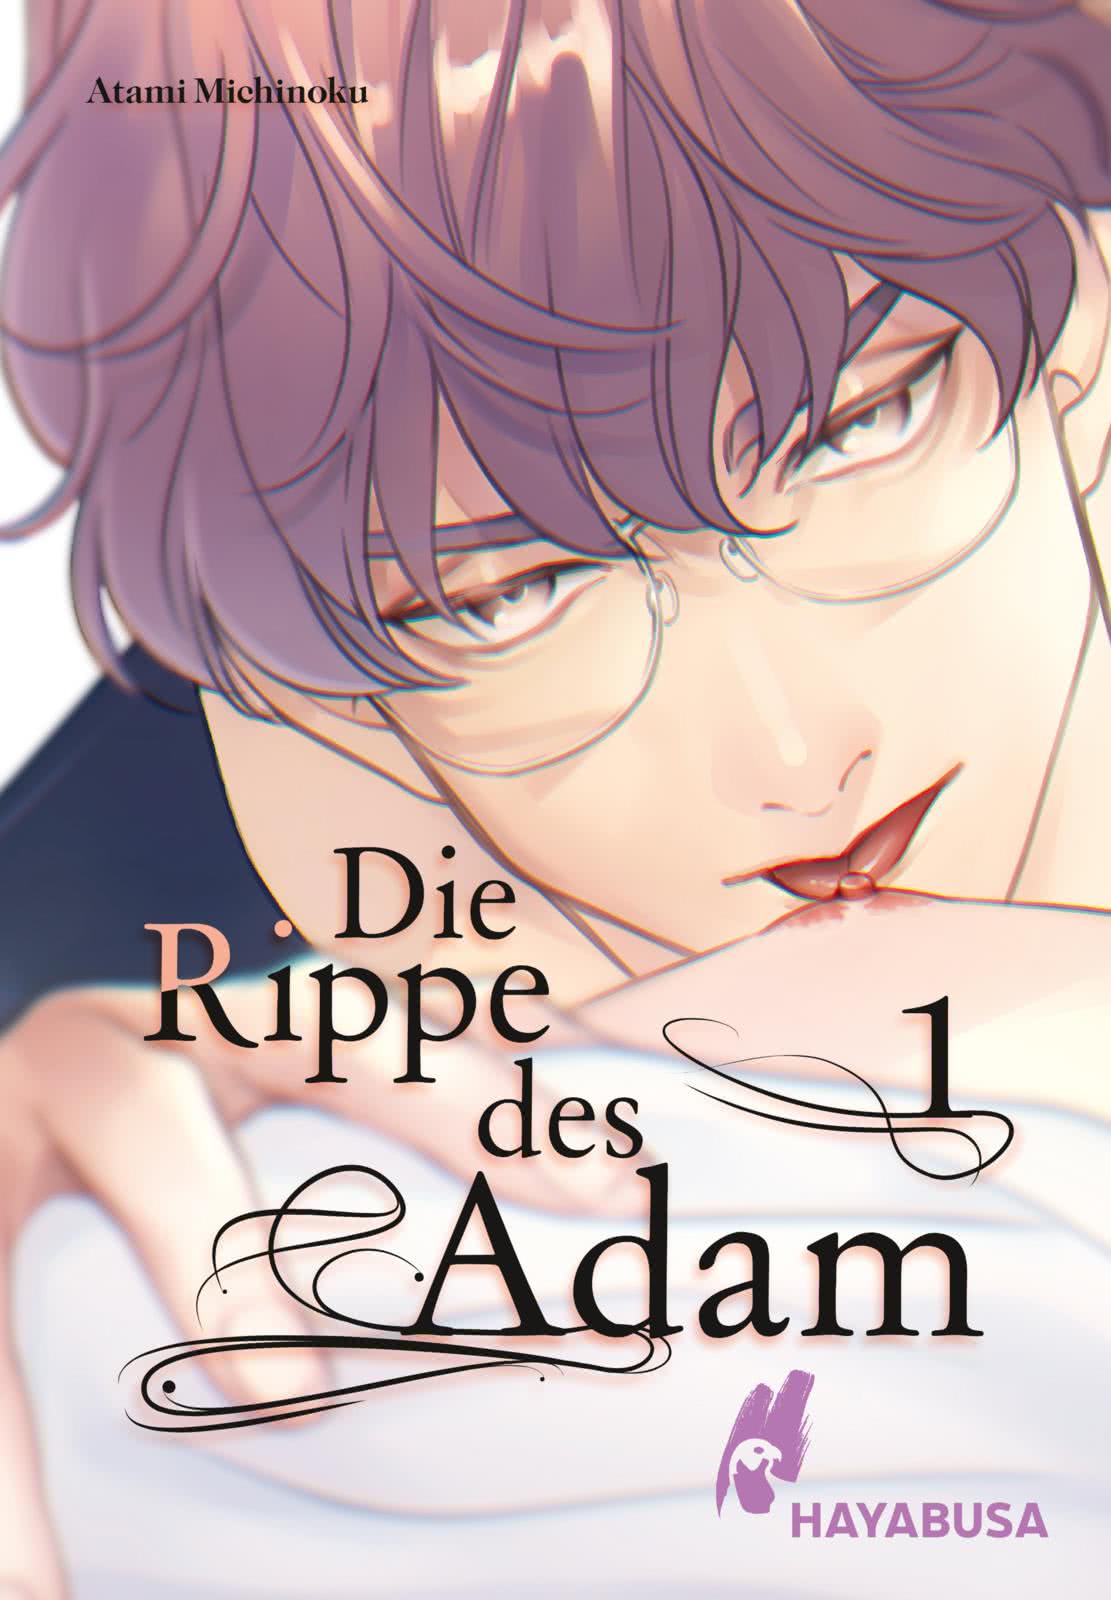 Die Rippe des Adam Band 1 Hayabusa Manga 